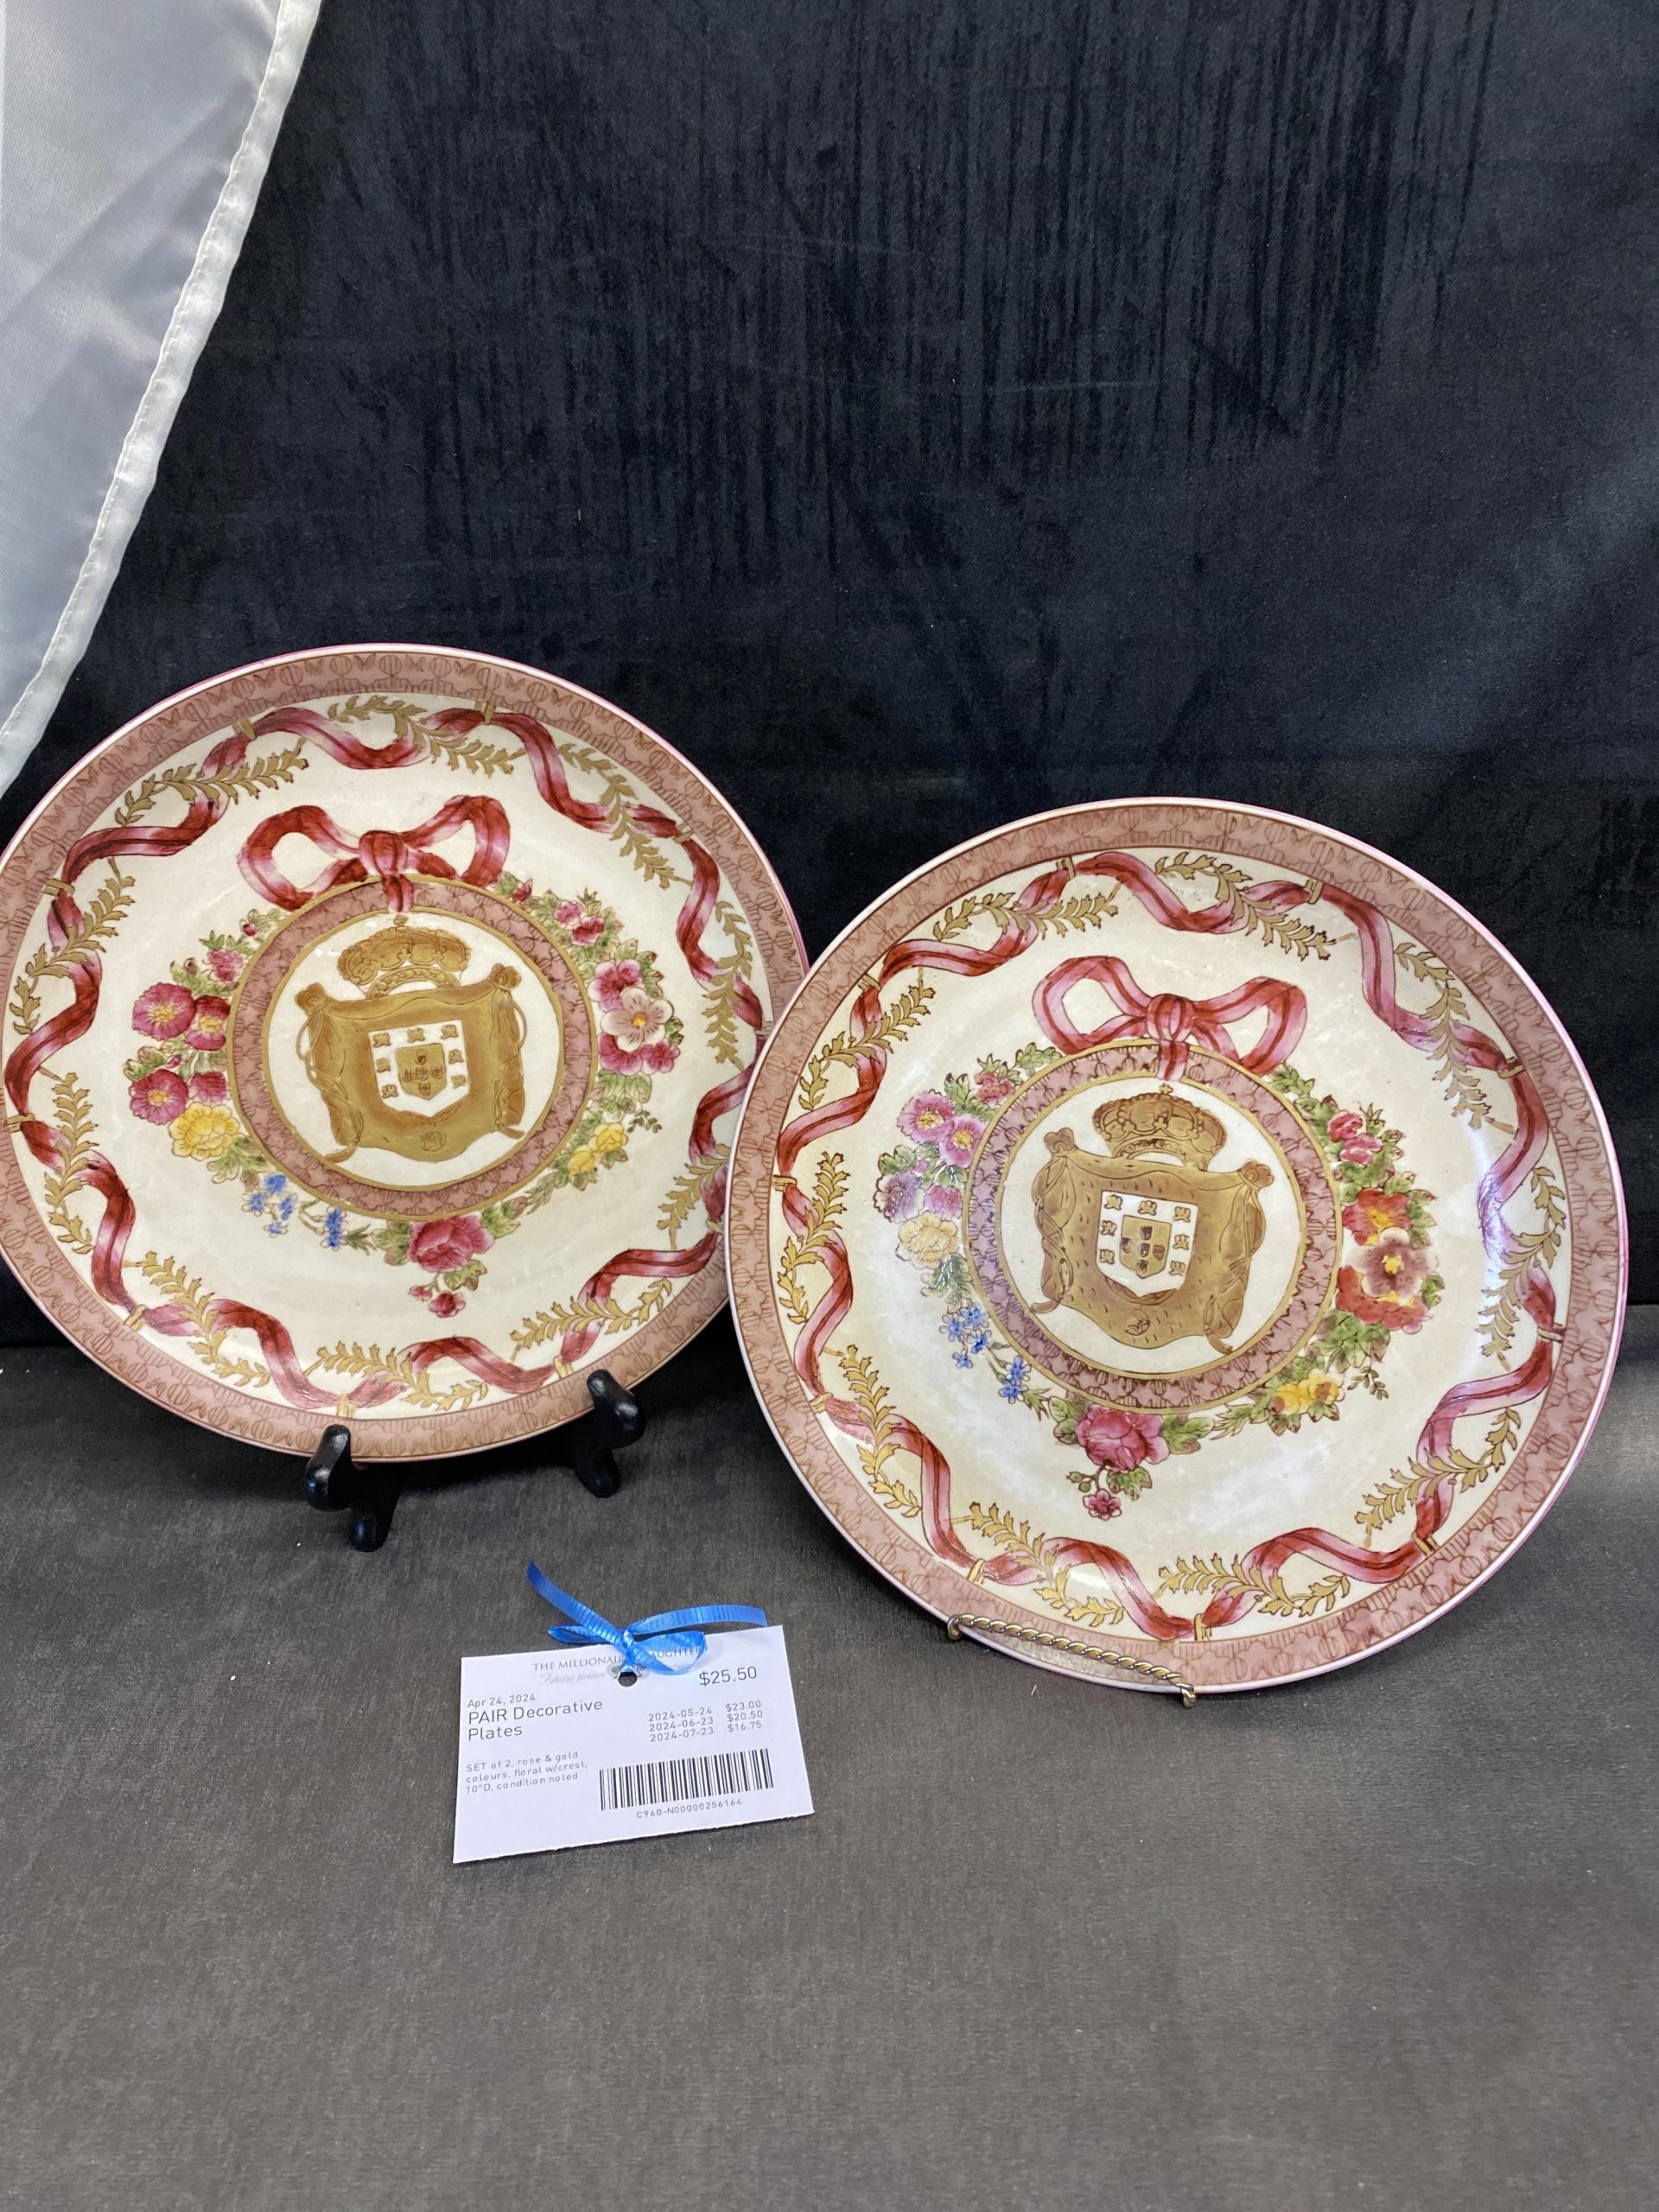 PAIR Decorative Plates